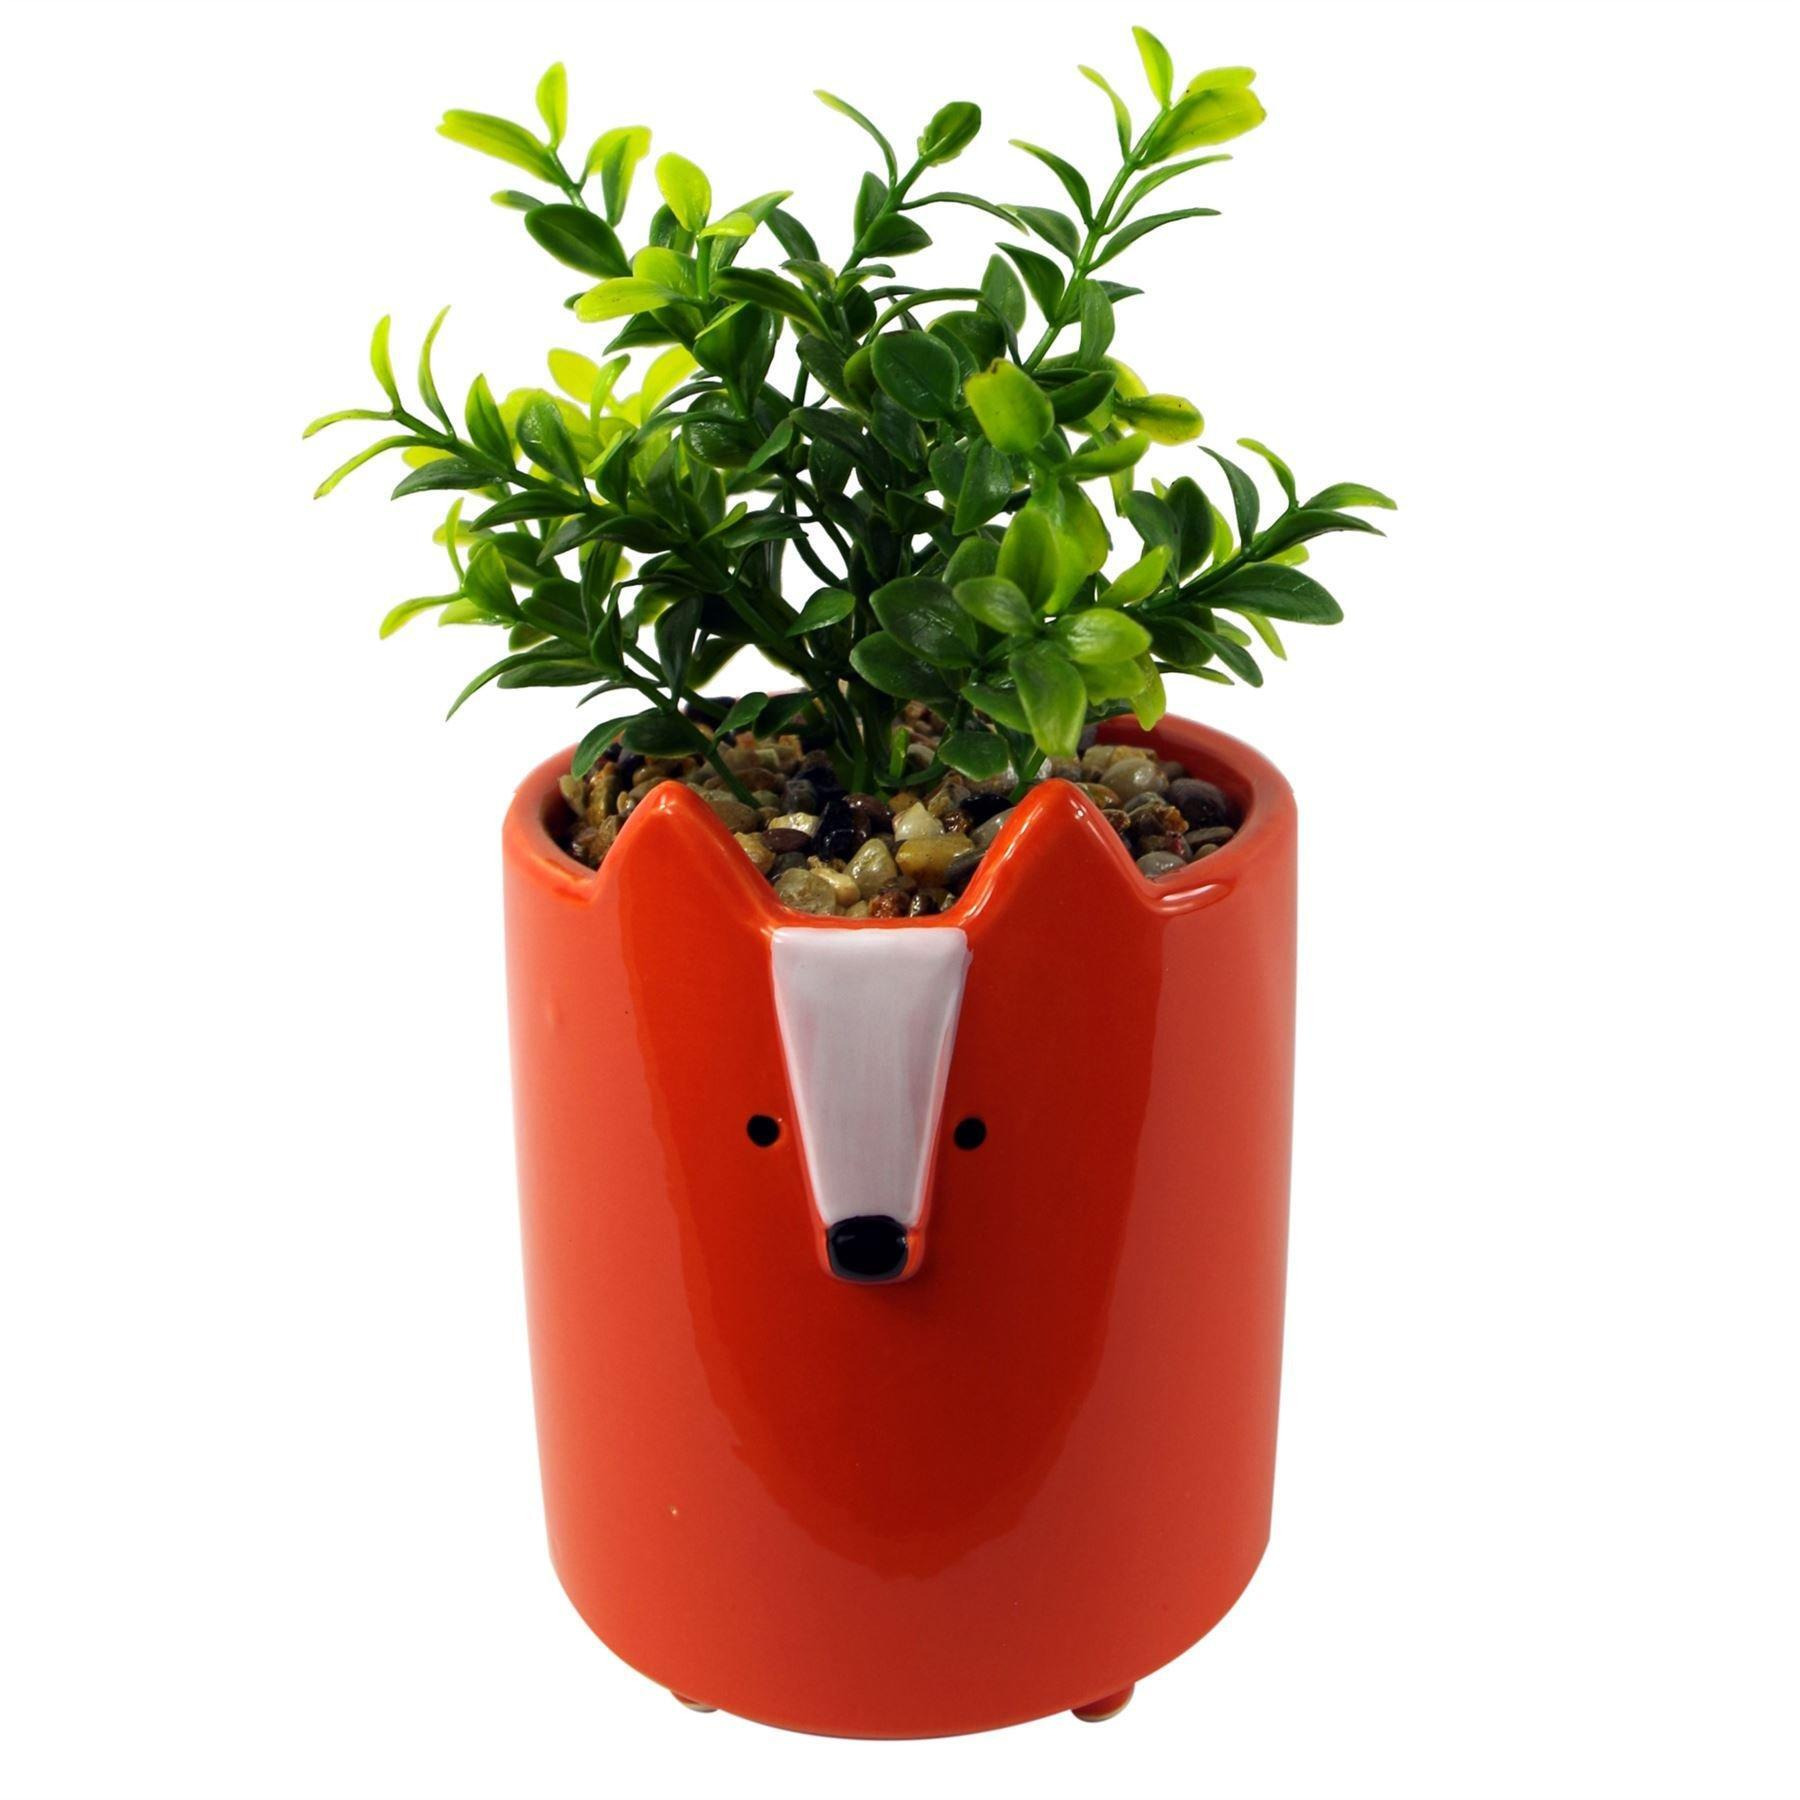 20cm Ceramic Orange Fox Planter with Artificial Foliage Plant - image 1